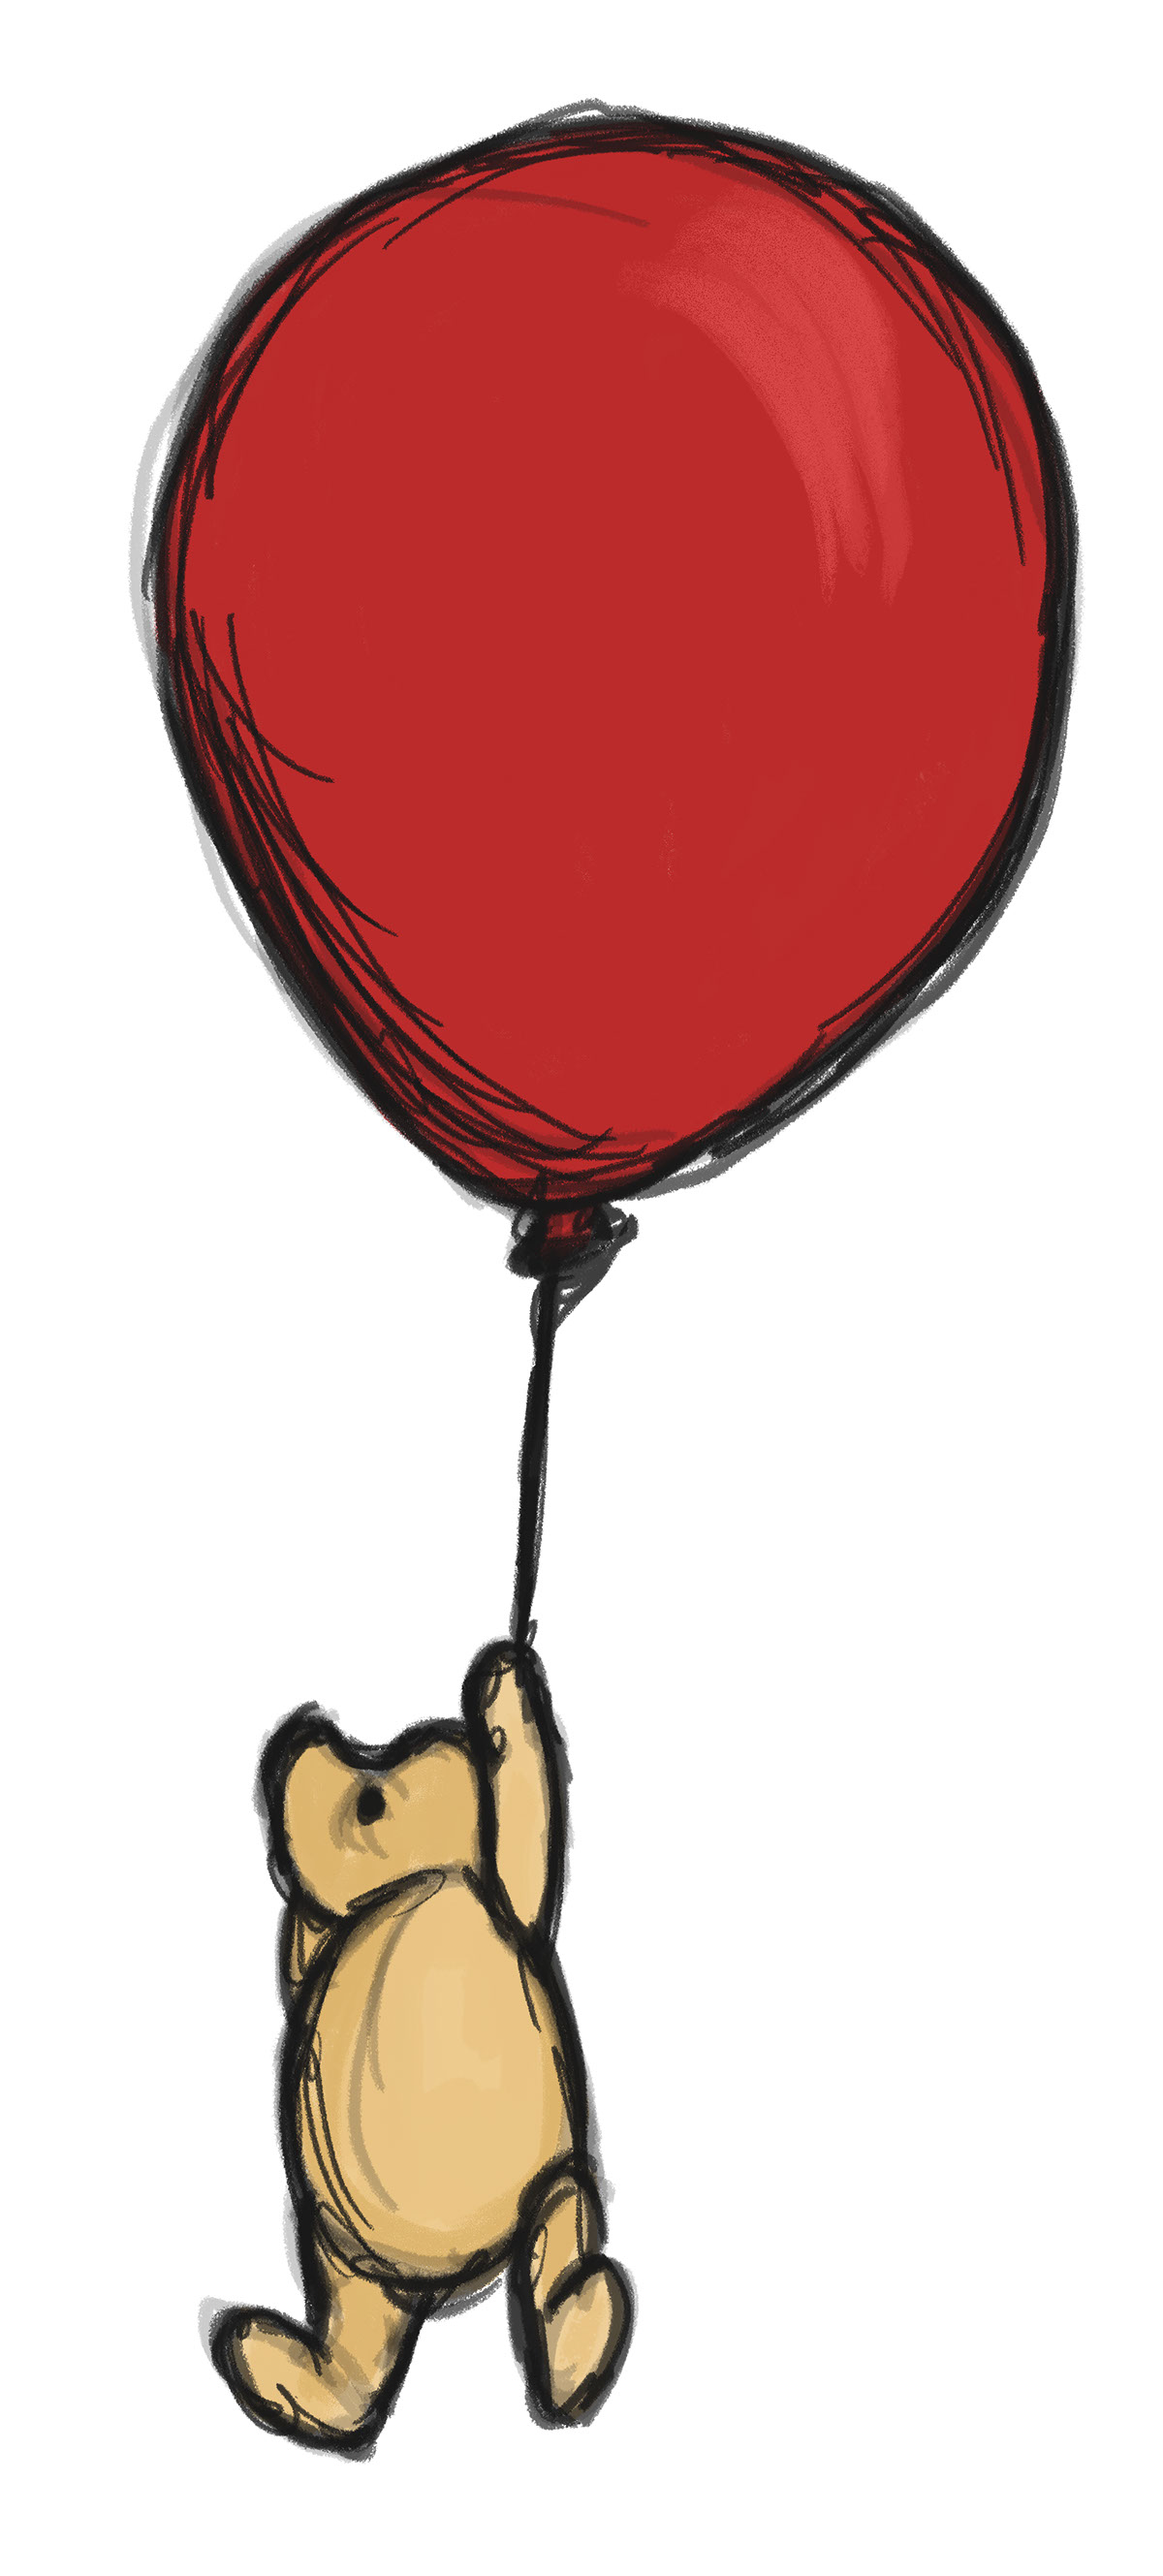 Pooh Balloon rendition image